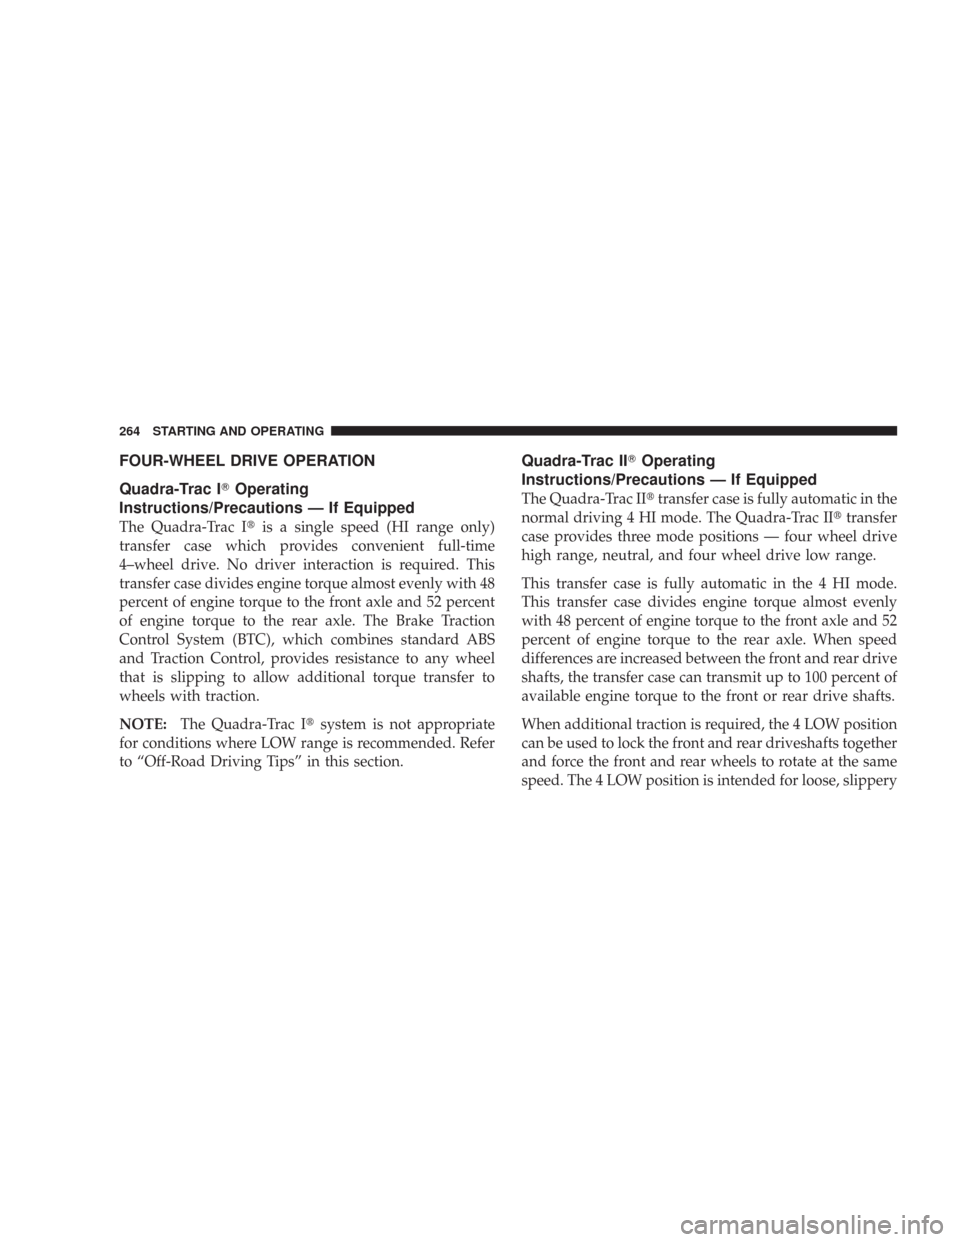 JEEP COMMANDER 2007 1.G Owners Manual FOUR-WHEEL DRIVE OPERATION
Quadra-Trac I	Operating
Instructions/Precautions — If Equipped
The Quadra-Trac Iis a single speed (HI range only)
transfer case which provides convenient full-time
4–wh